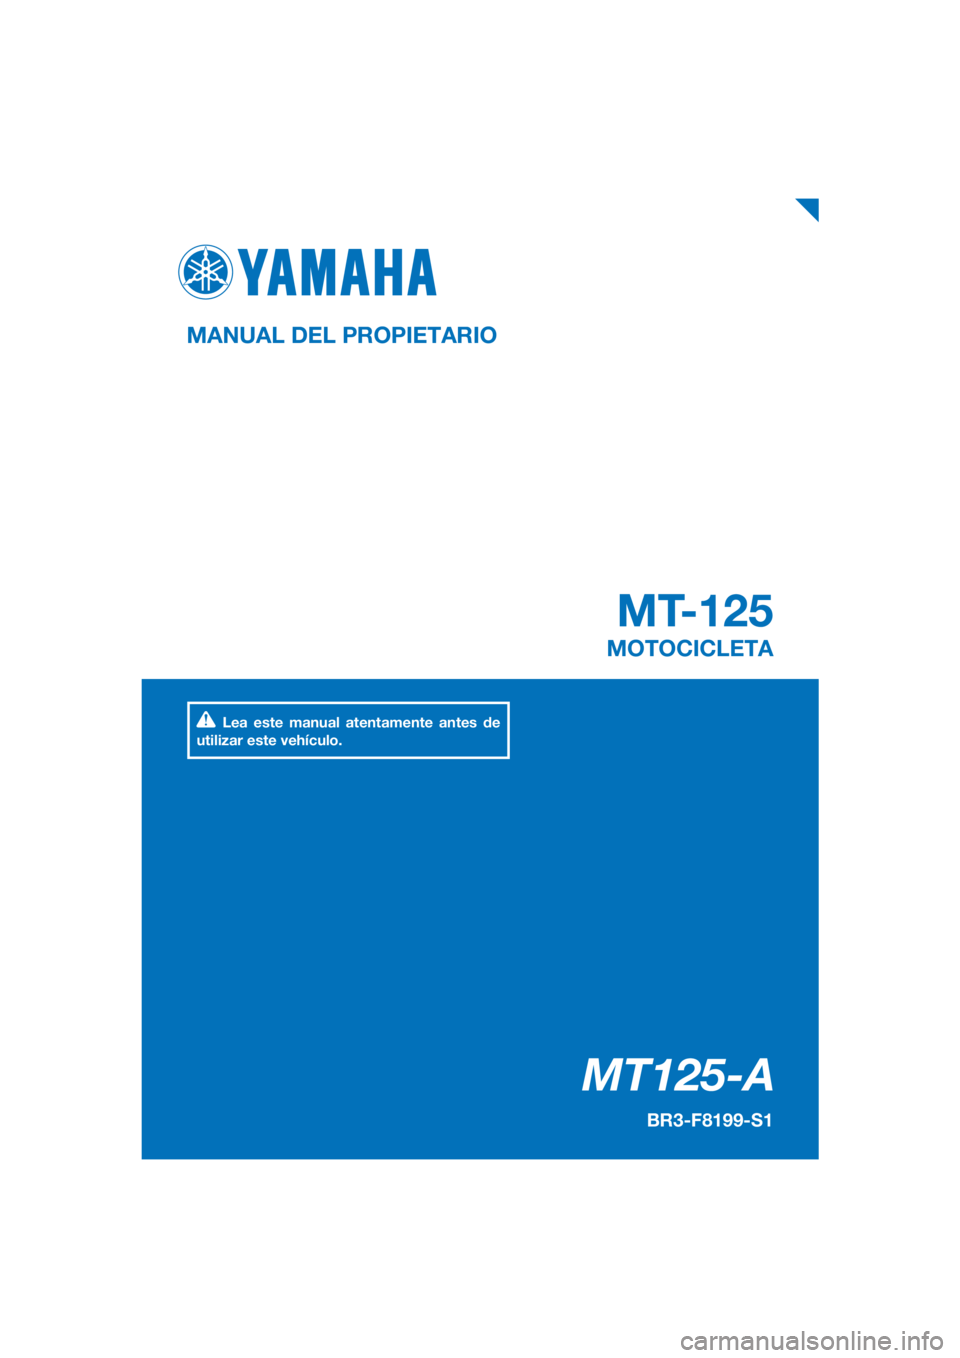 YAMAHA MT-125 2018  Manuale de Empleo (in Spanish) 